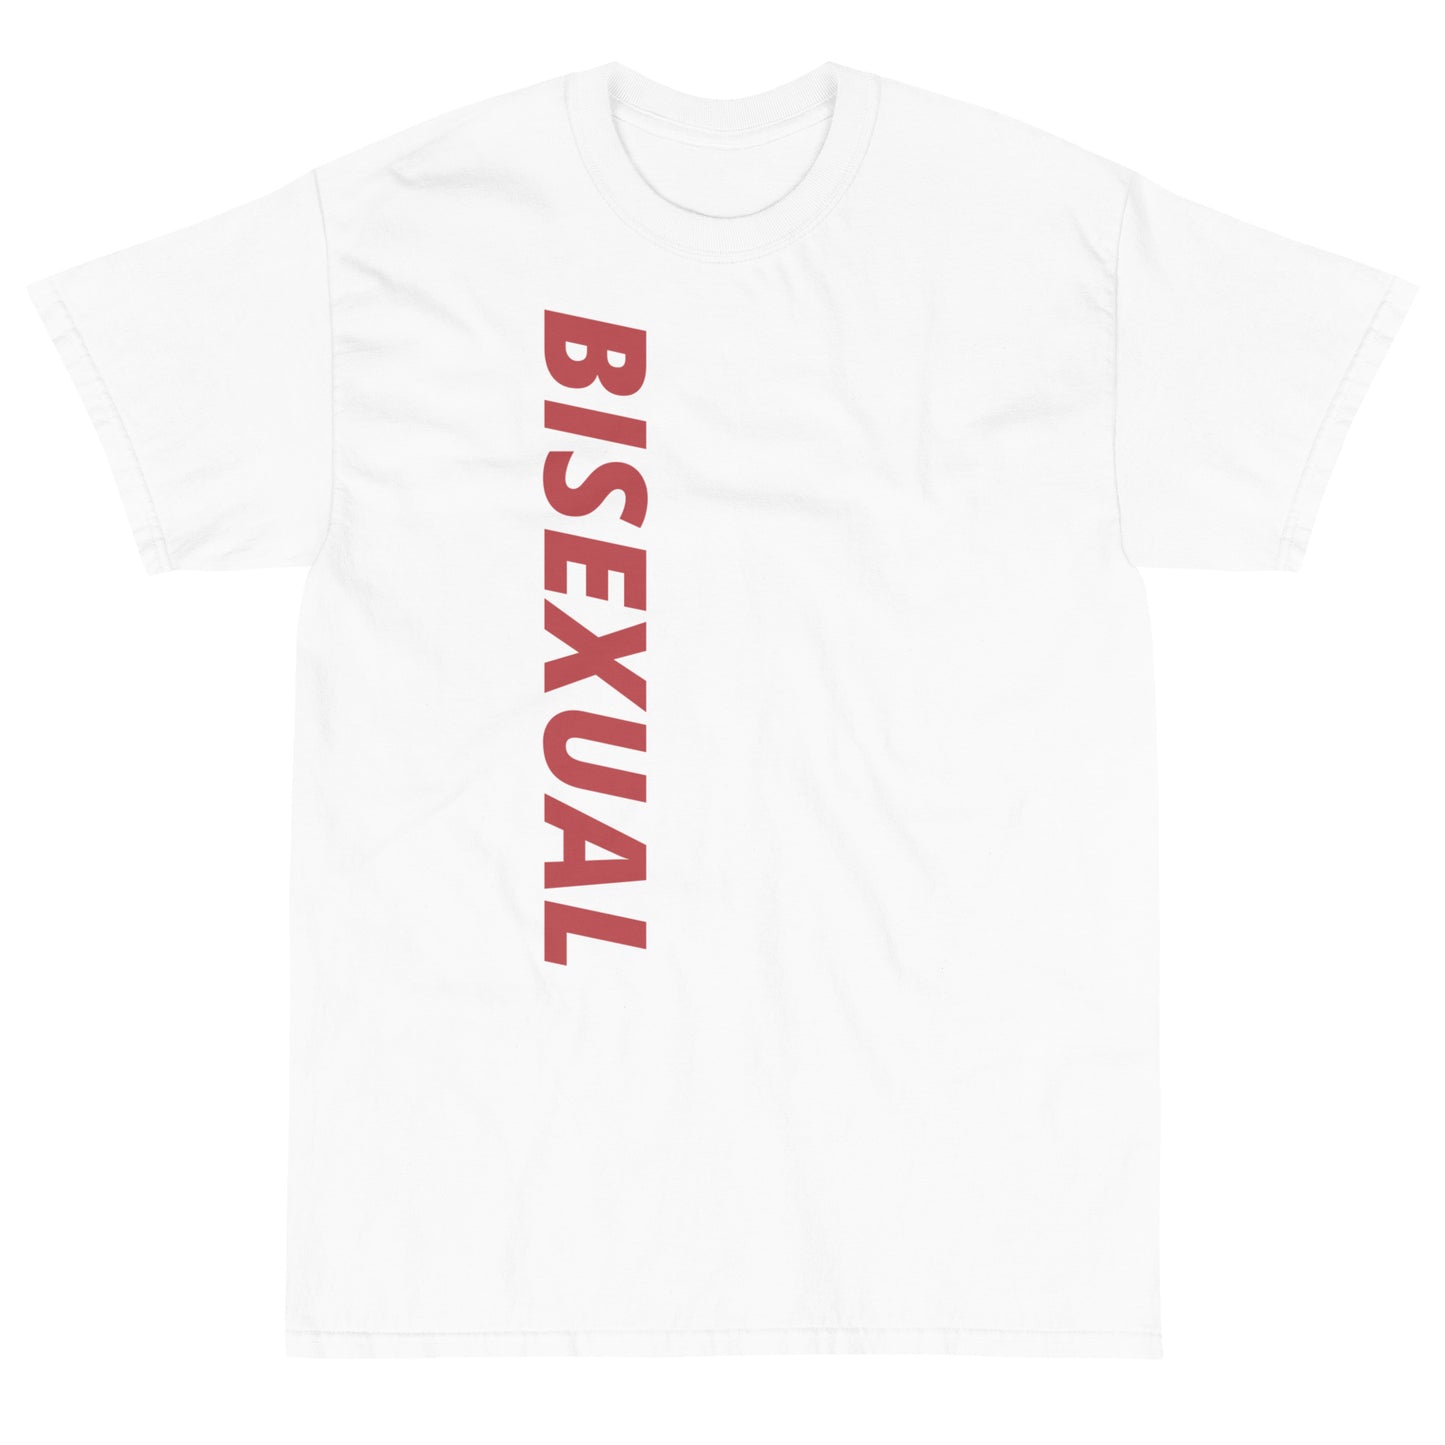 "Bisexual" Short Sleeve T-Shirt